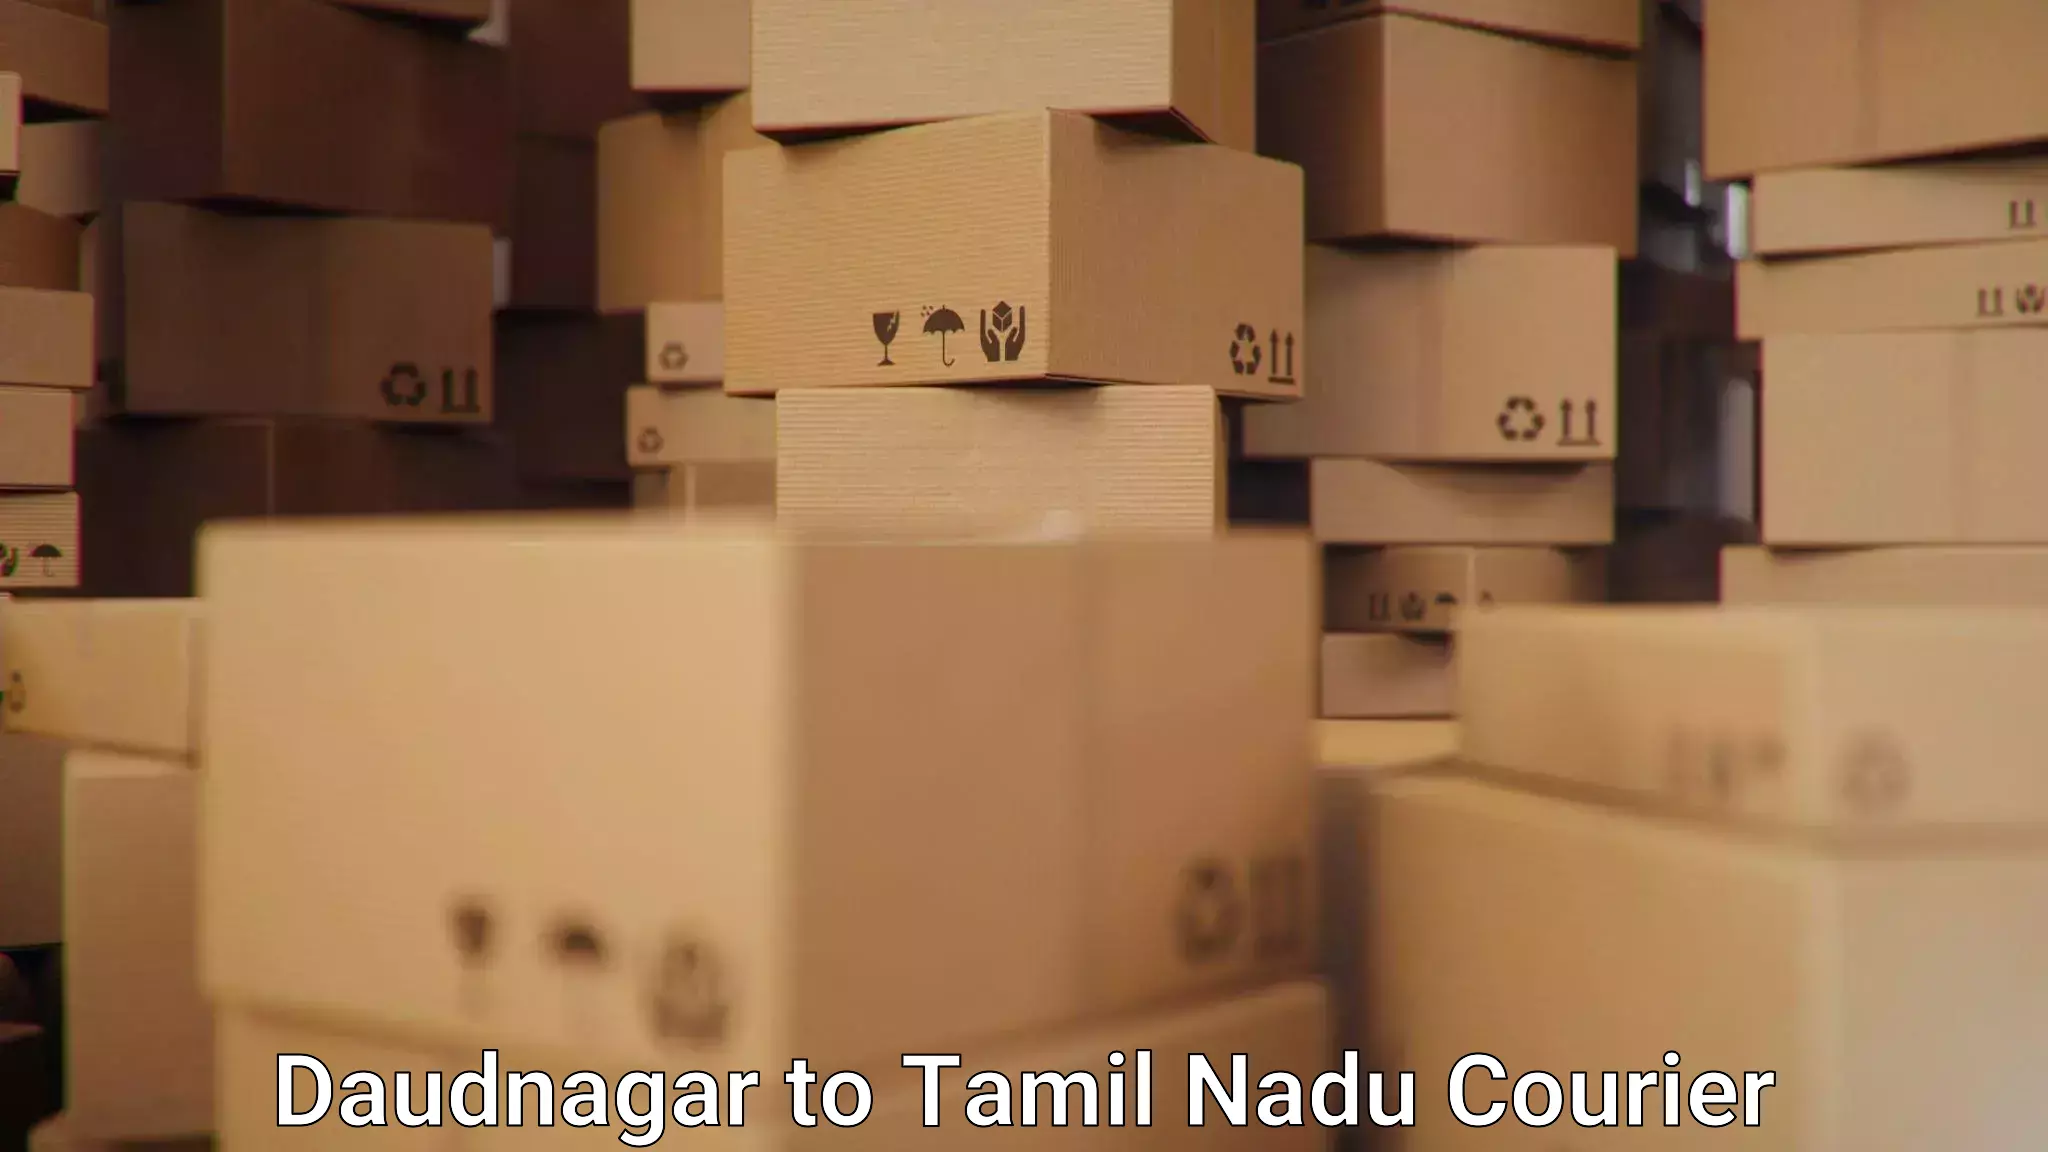 Easy return solutions Daudnagar to Tamil Nadu